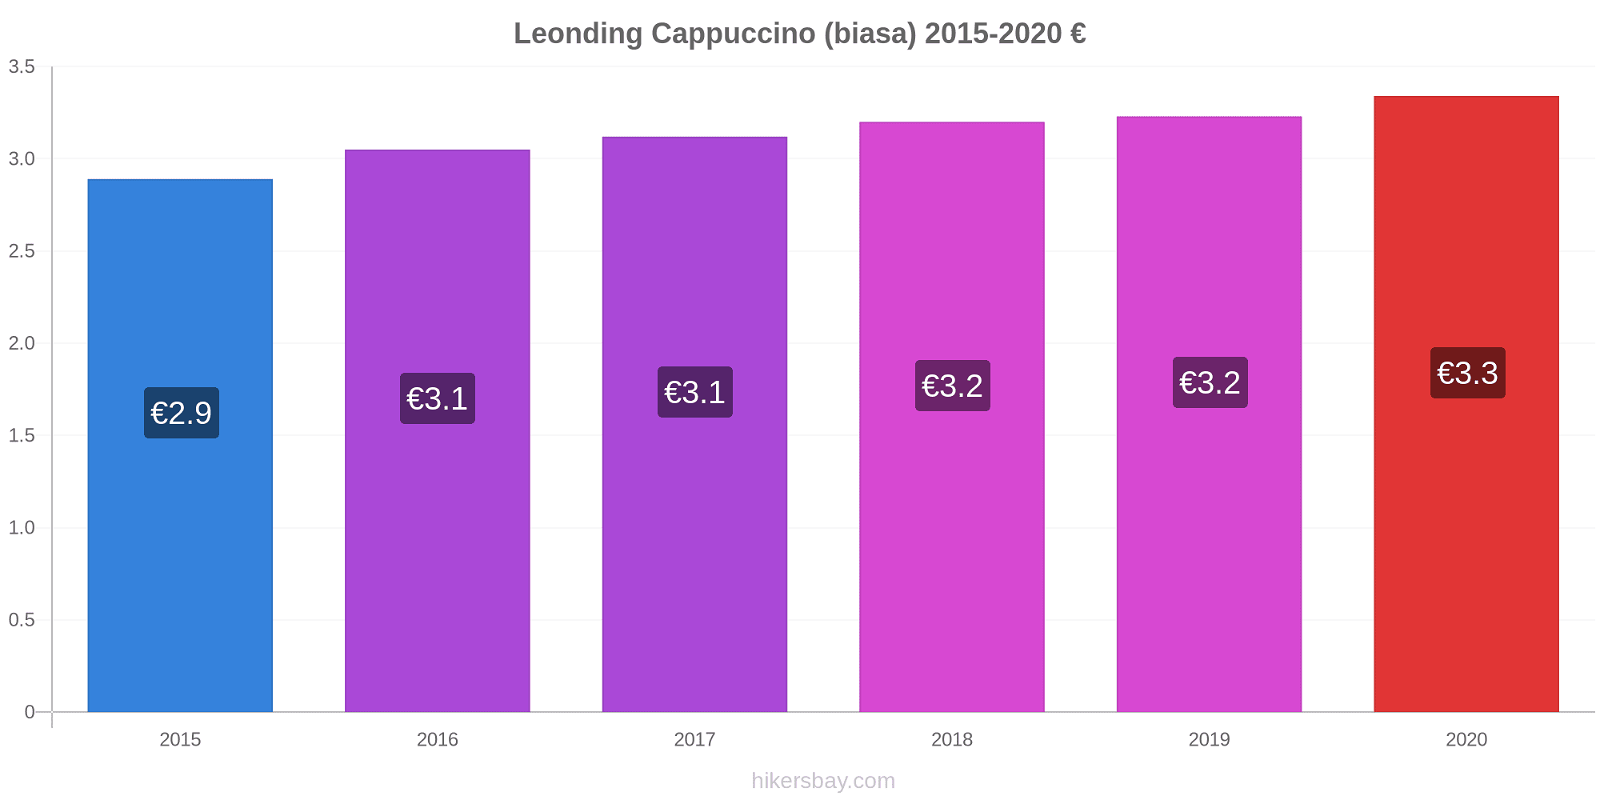 Leonding perubahan harga Cappuccino (biasa) hikersbay.com